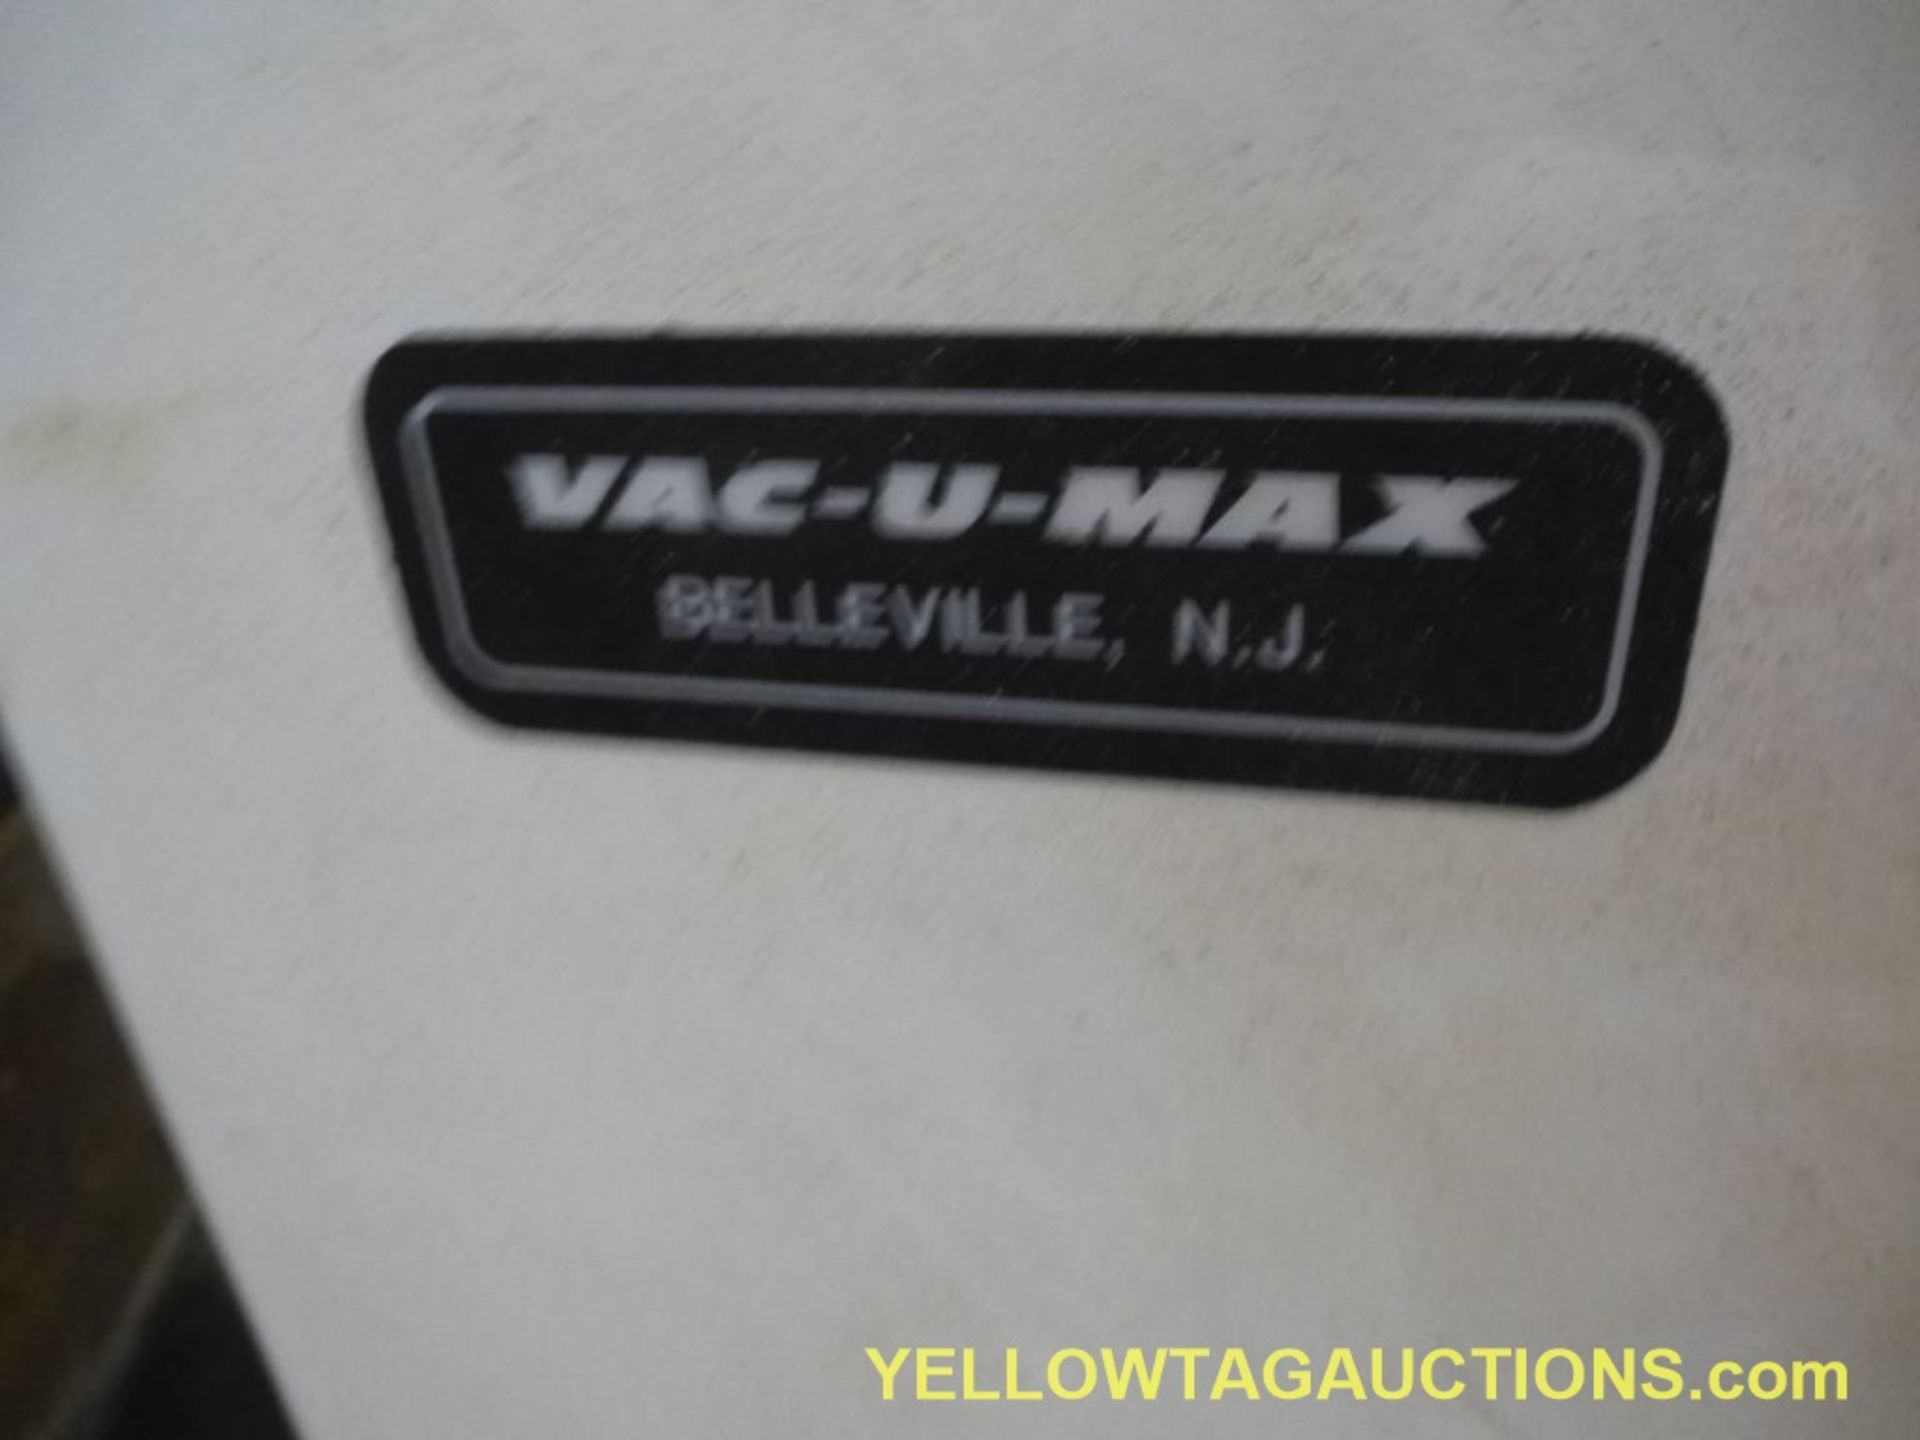 Vac-U-Max Unloader|Lot Loading Fee: $5.00 - Image 7 of 7